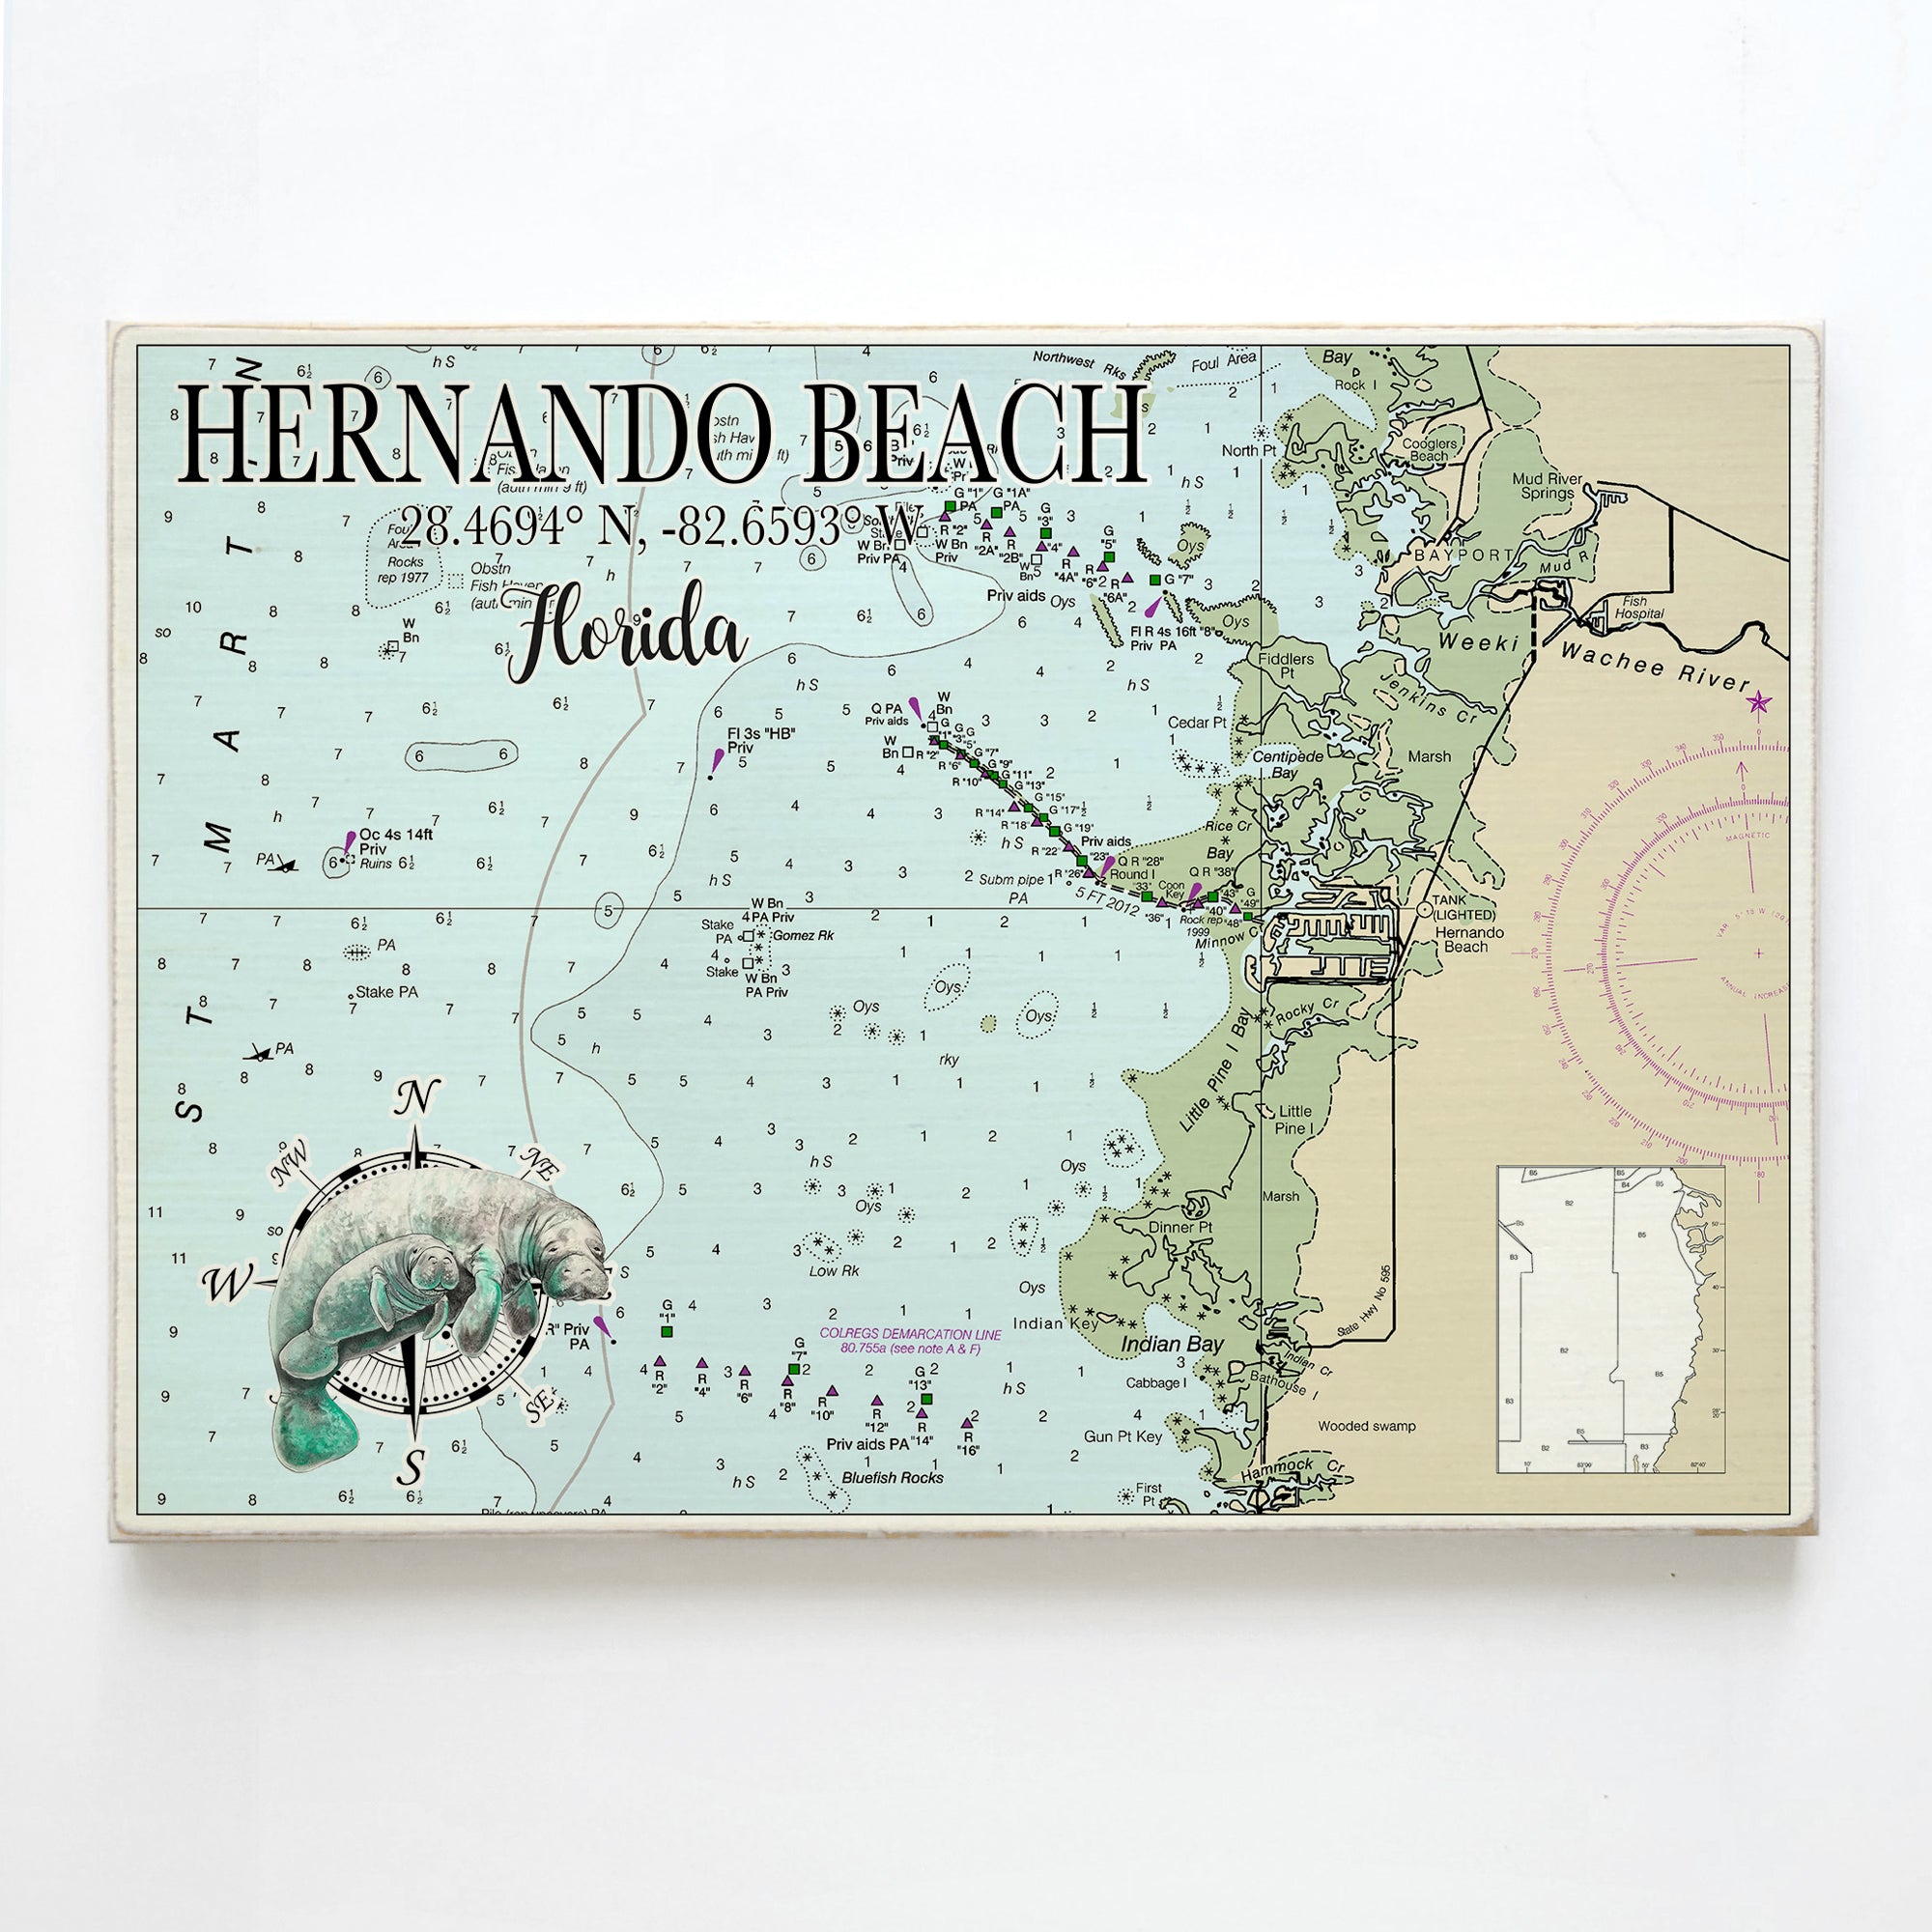 Hernando Beach, FL  Manatee Plank Map